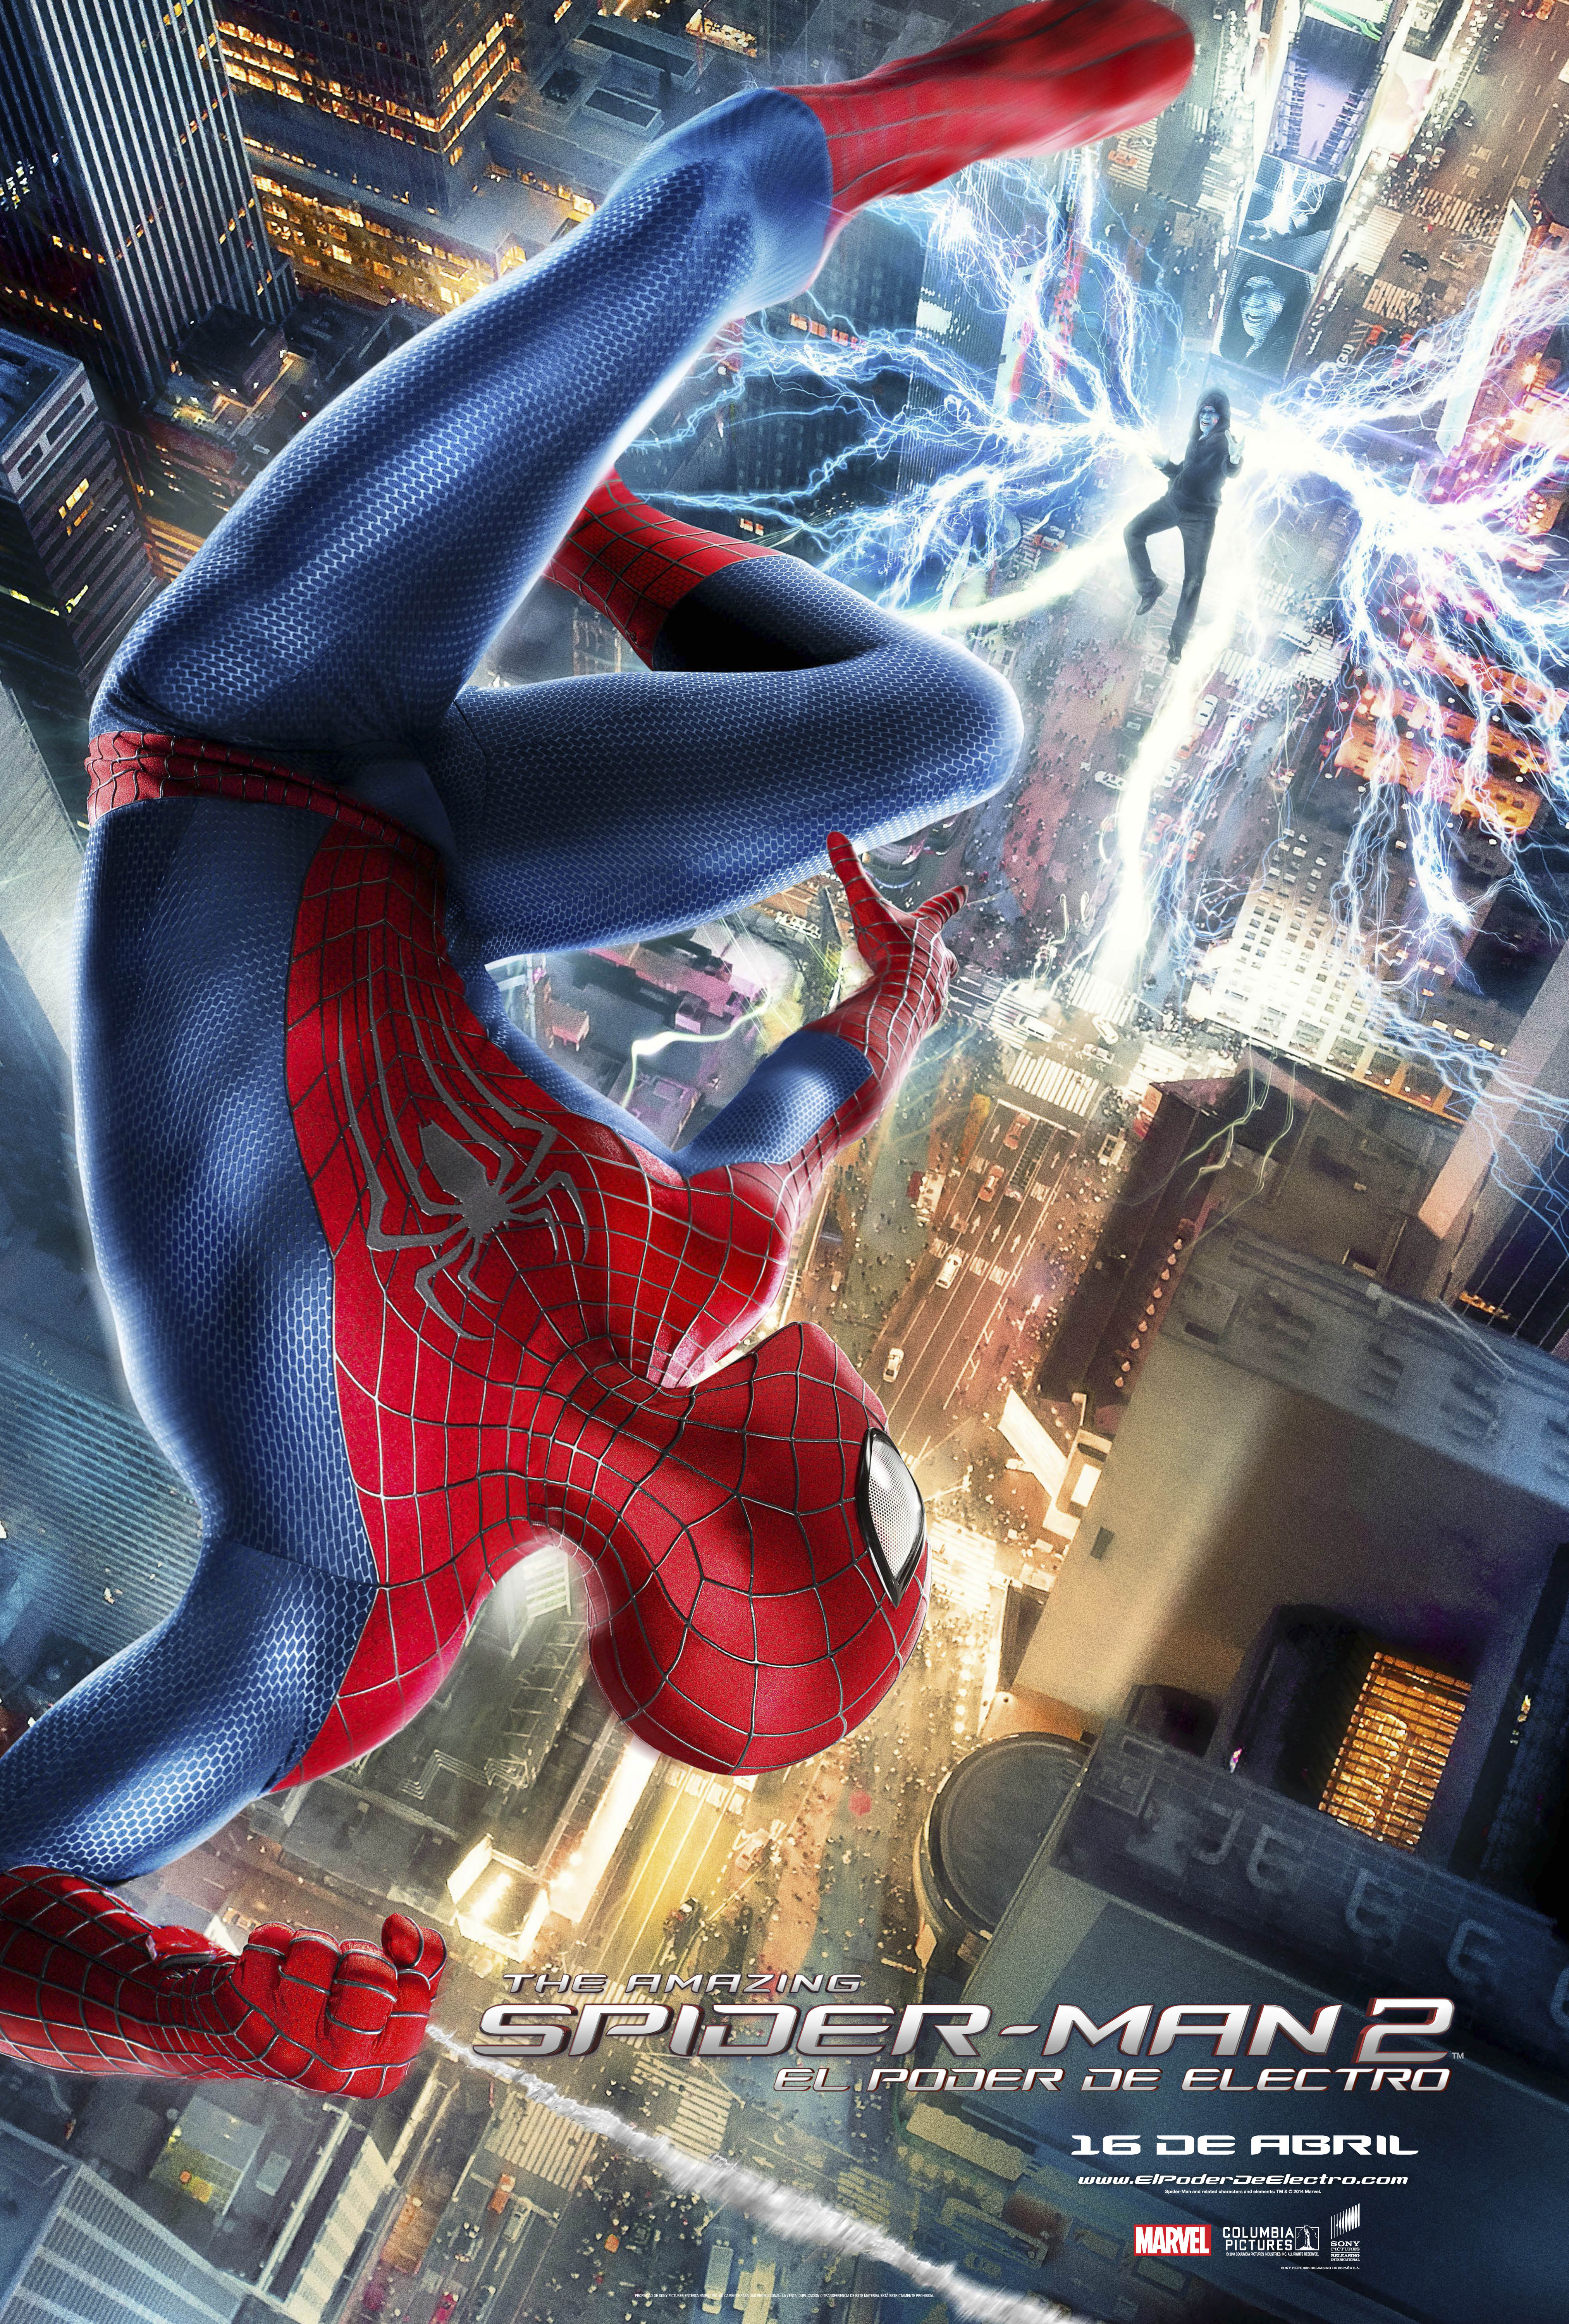 http://st-im.kinopoisk.ru/im/poster/2/4/0/kinopoisk.ru-The-Amazing-Spider-Man-2-2406924--o--.jpg